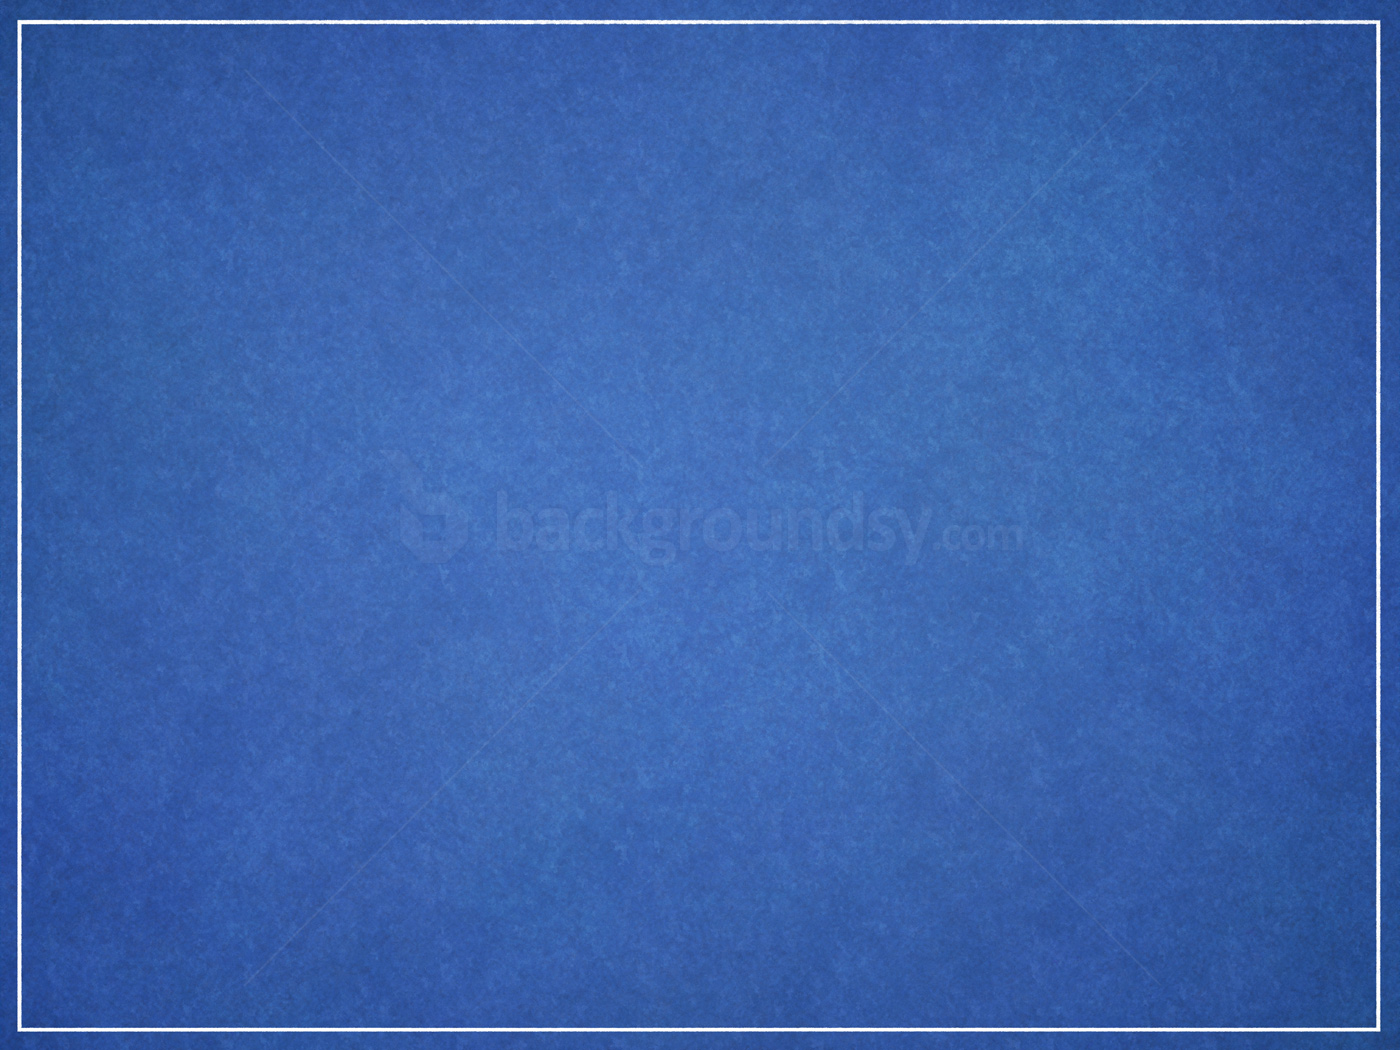 blank blueprint background